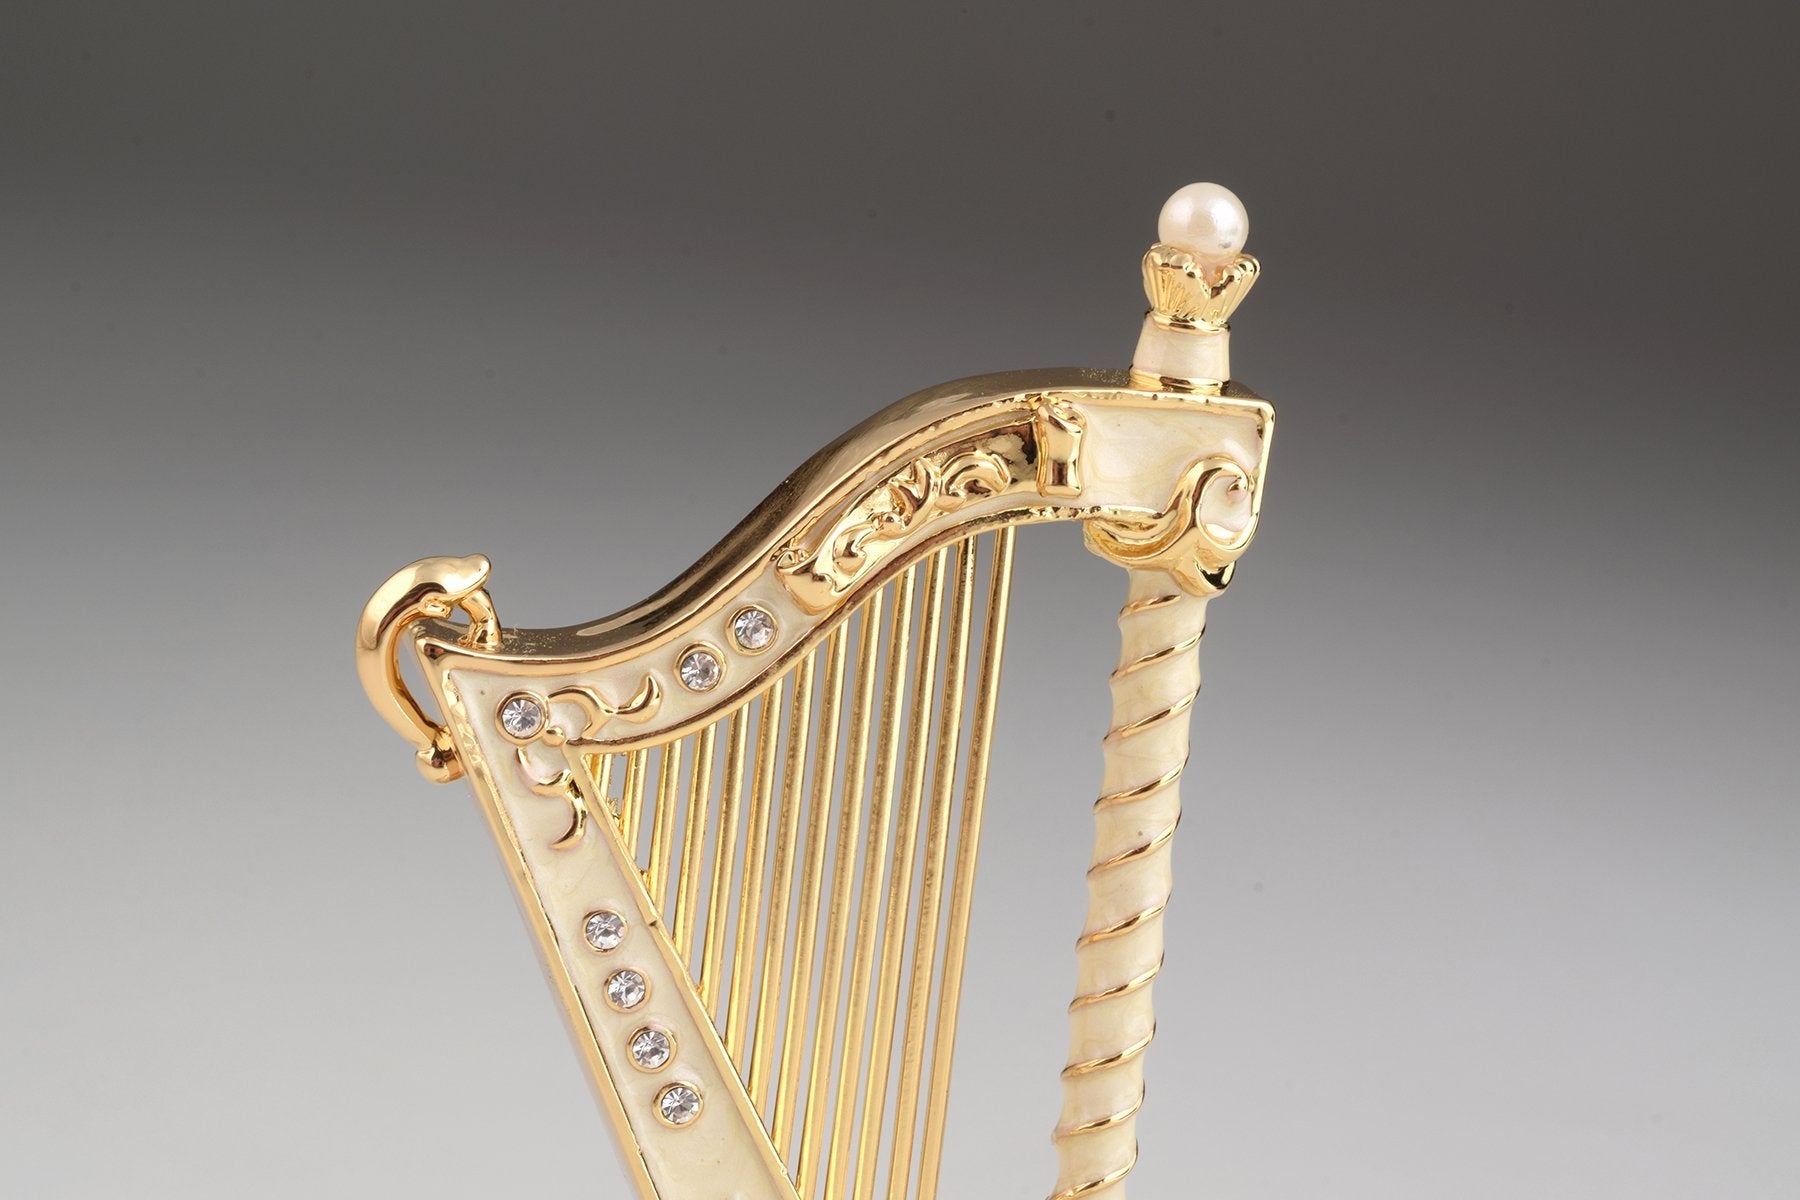 Keren Kopal White Harp  99.00